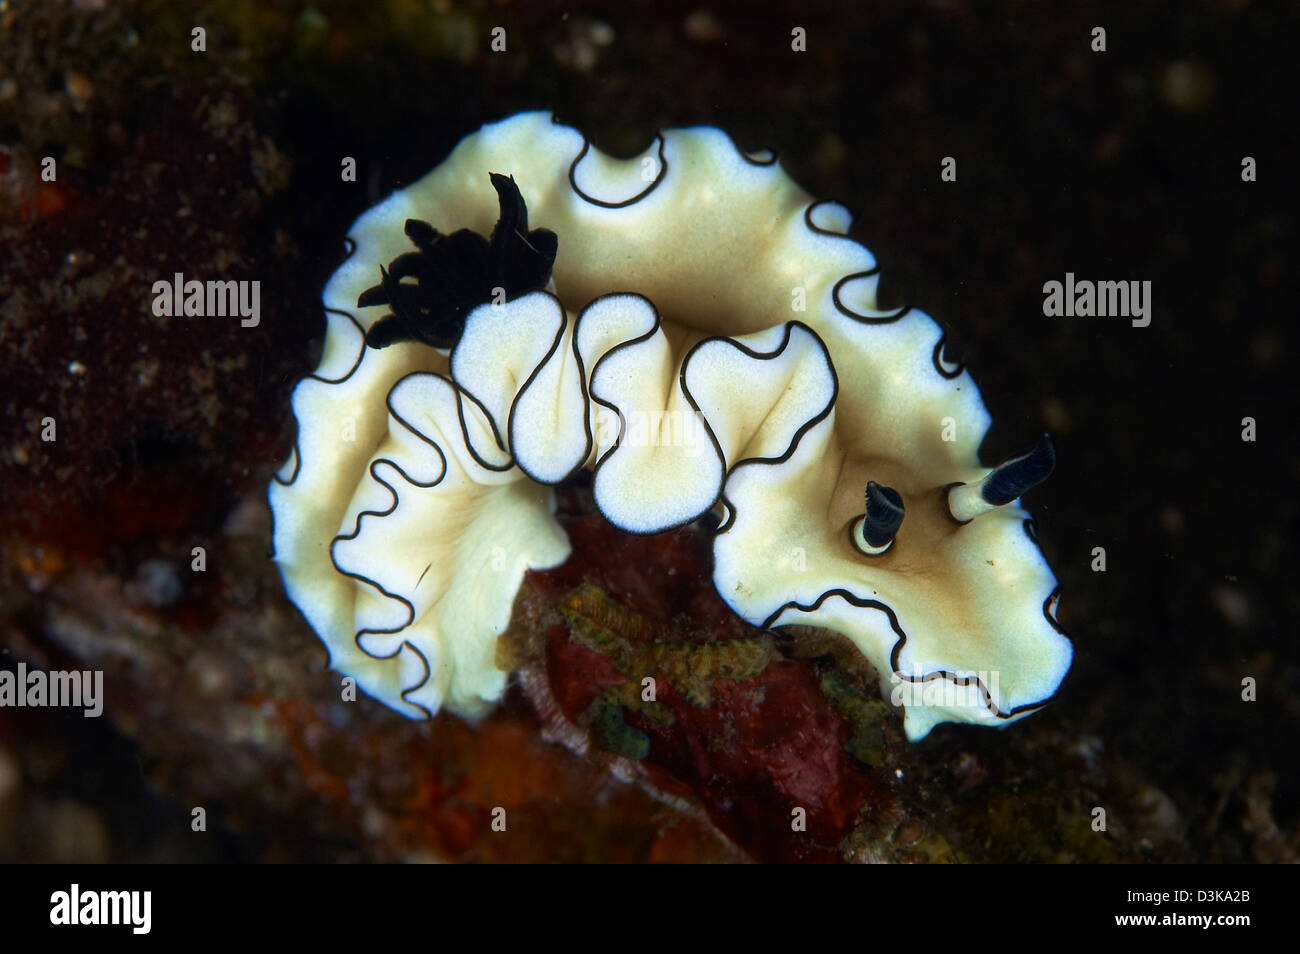 Yellow white and black Glossodoris atromarginata nudibranch sea slug, Bali, Indonesia. Stock Photo